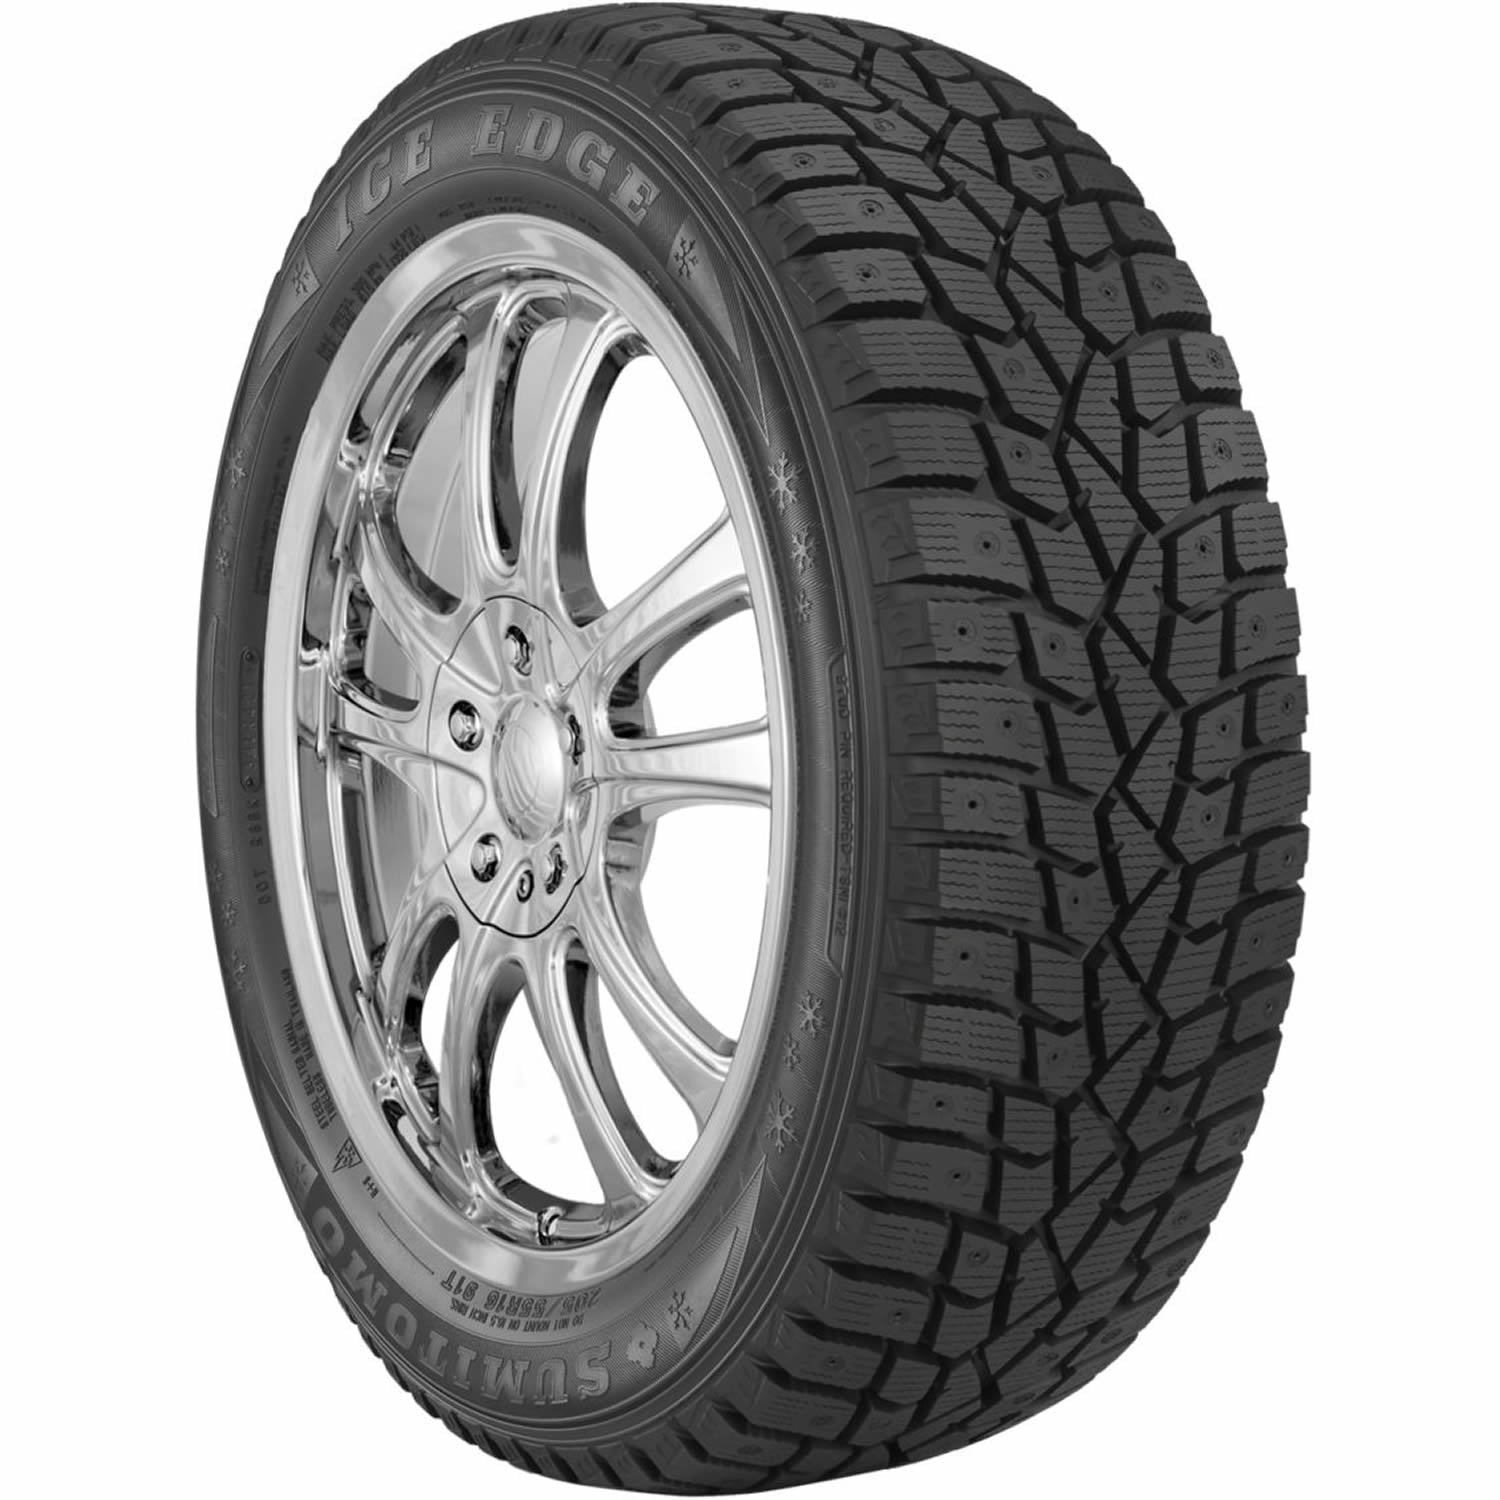 SUMITOMO ICE EDGE 245/50R20 (30X9.1R 20) Tires